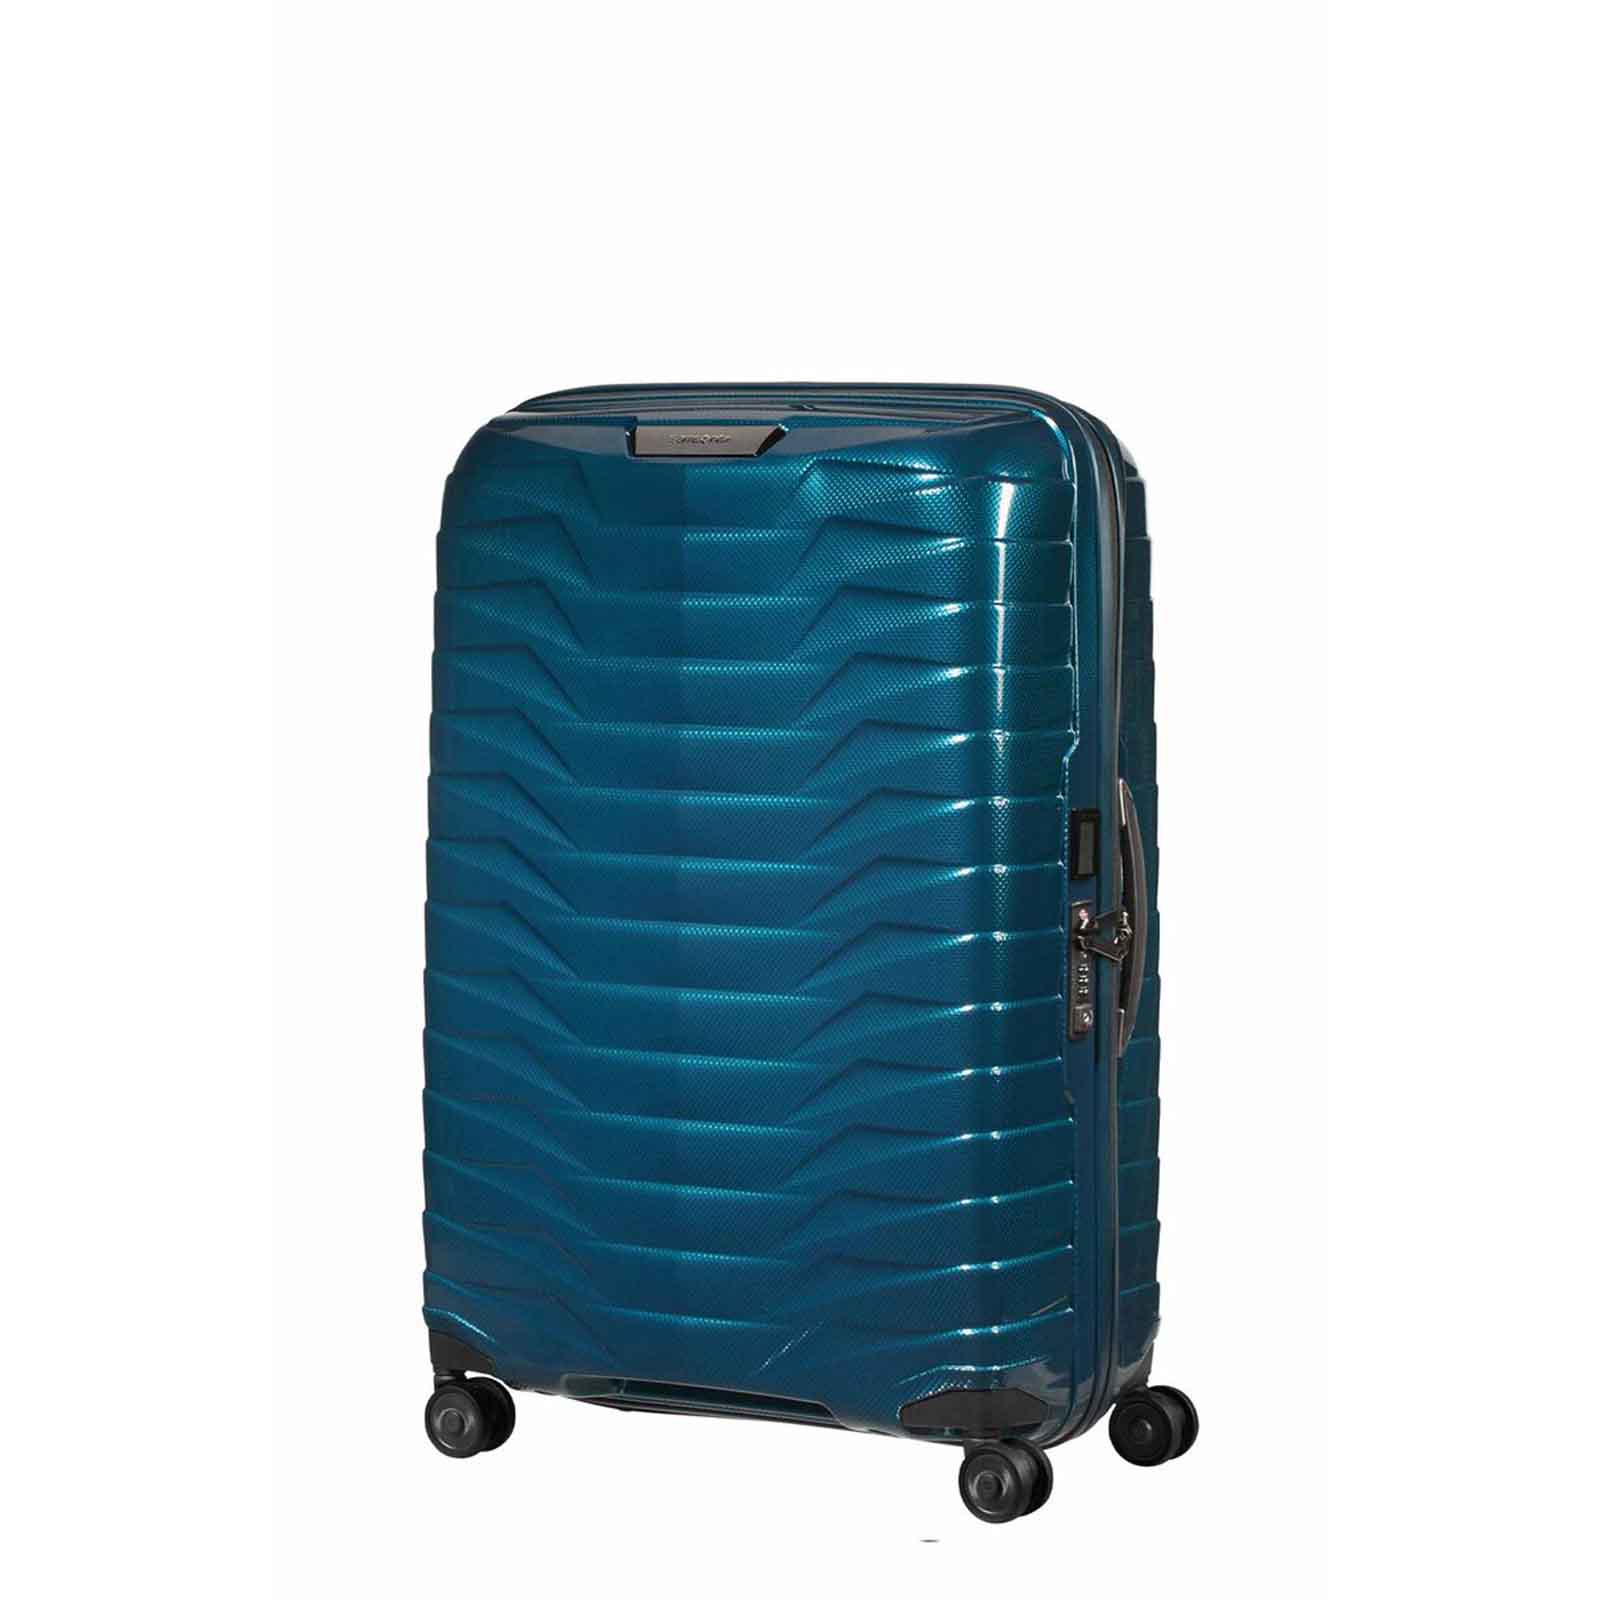 Samsonite-Proxis-75cm-Suitcase-Petrol-Blue-Front-Angle